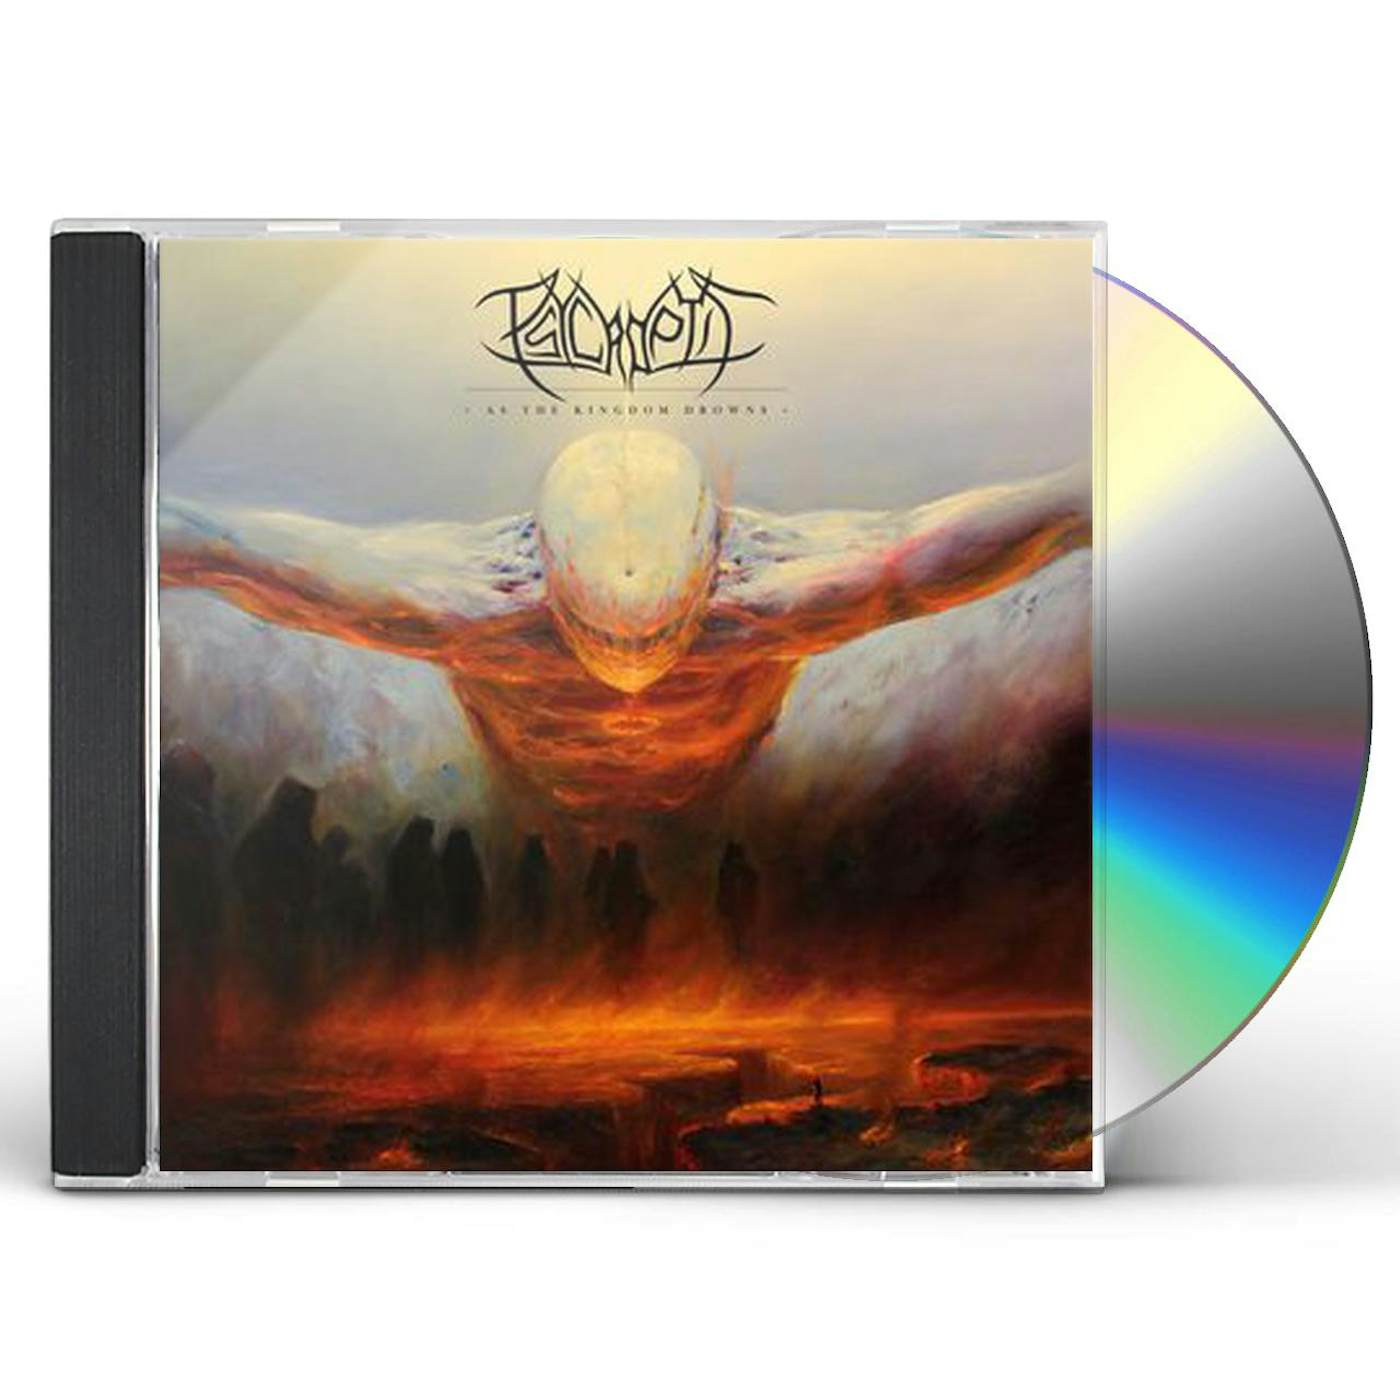 Psycroptic AS THE KINGDOM DROWNS CD